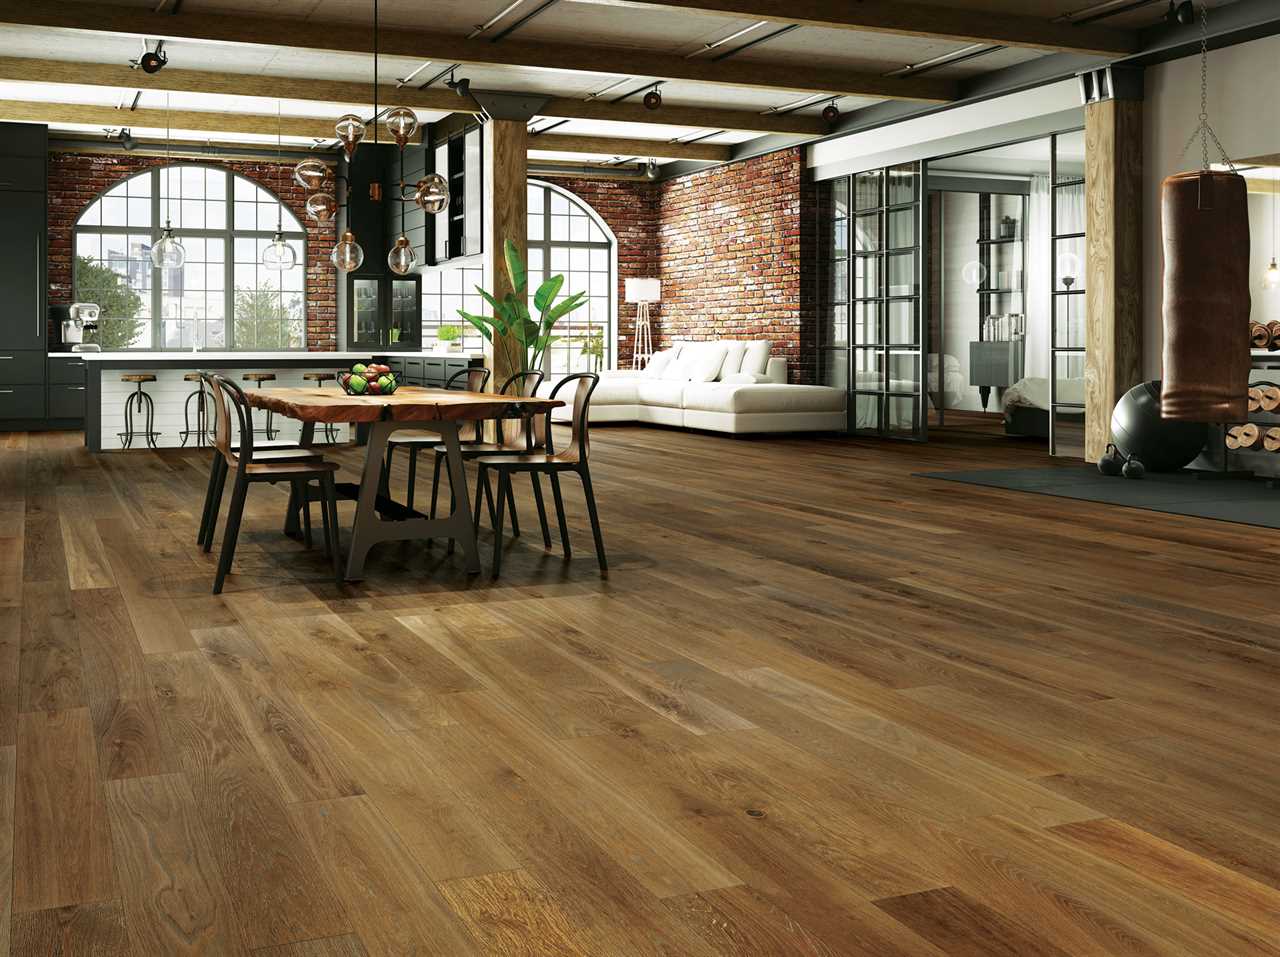 Premium hardwood floors in Vancouver, British Columbia